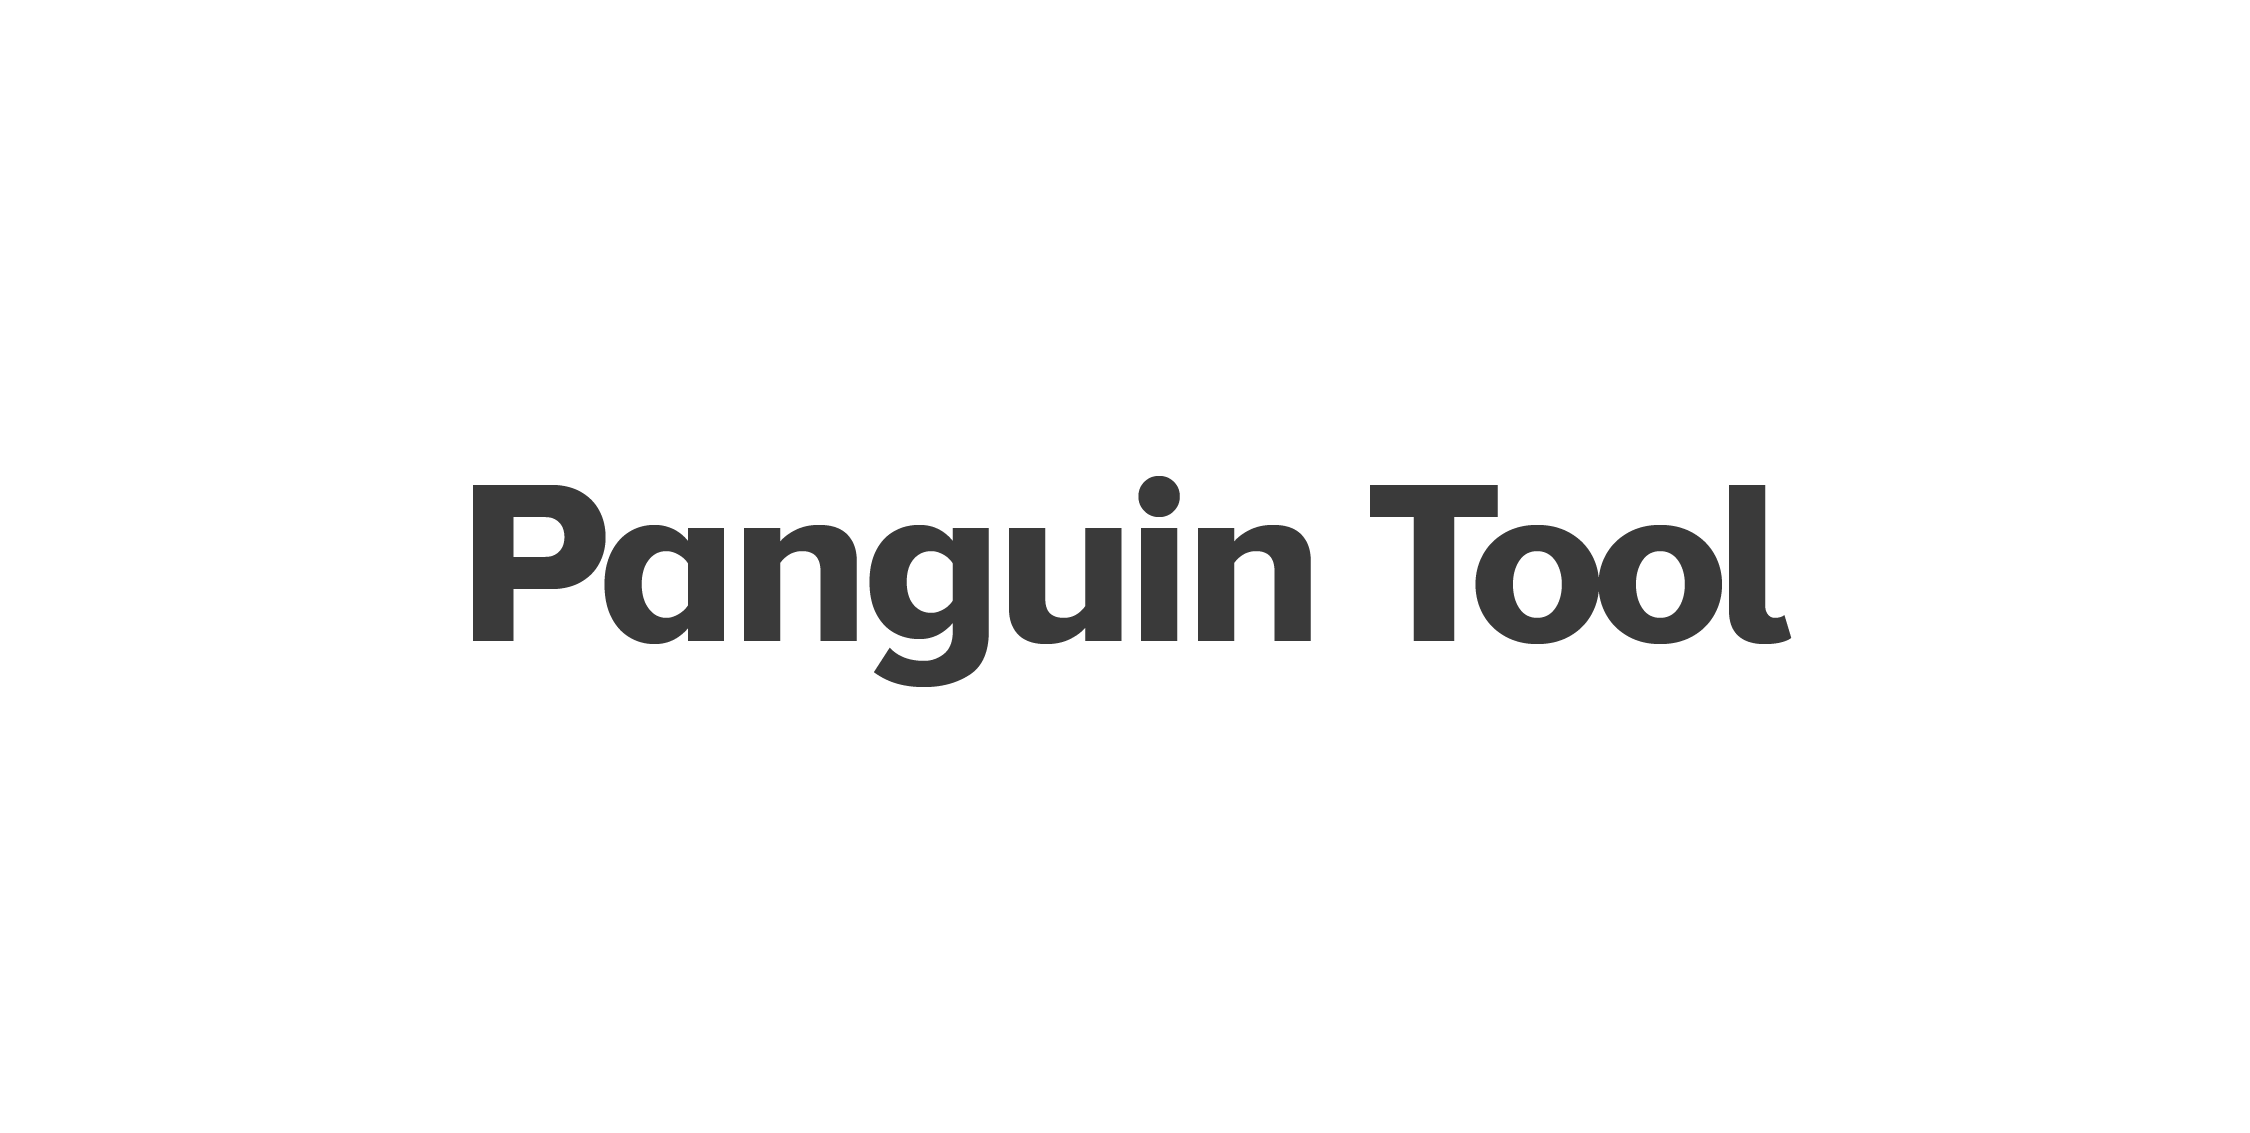 Panguin Tool demand generation tools